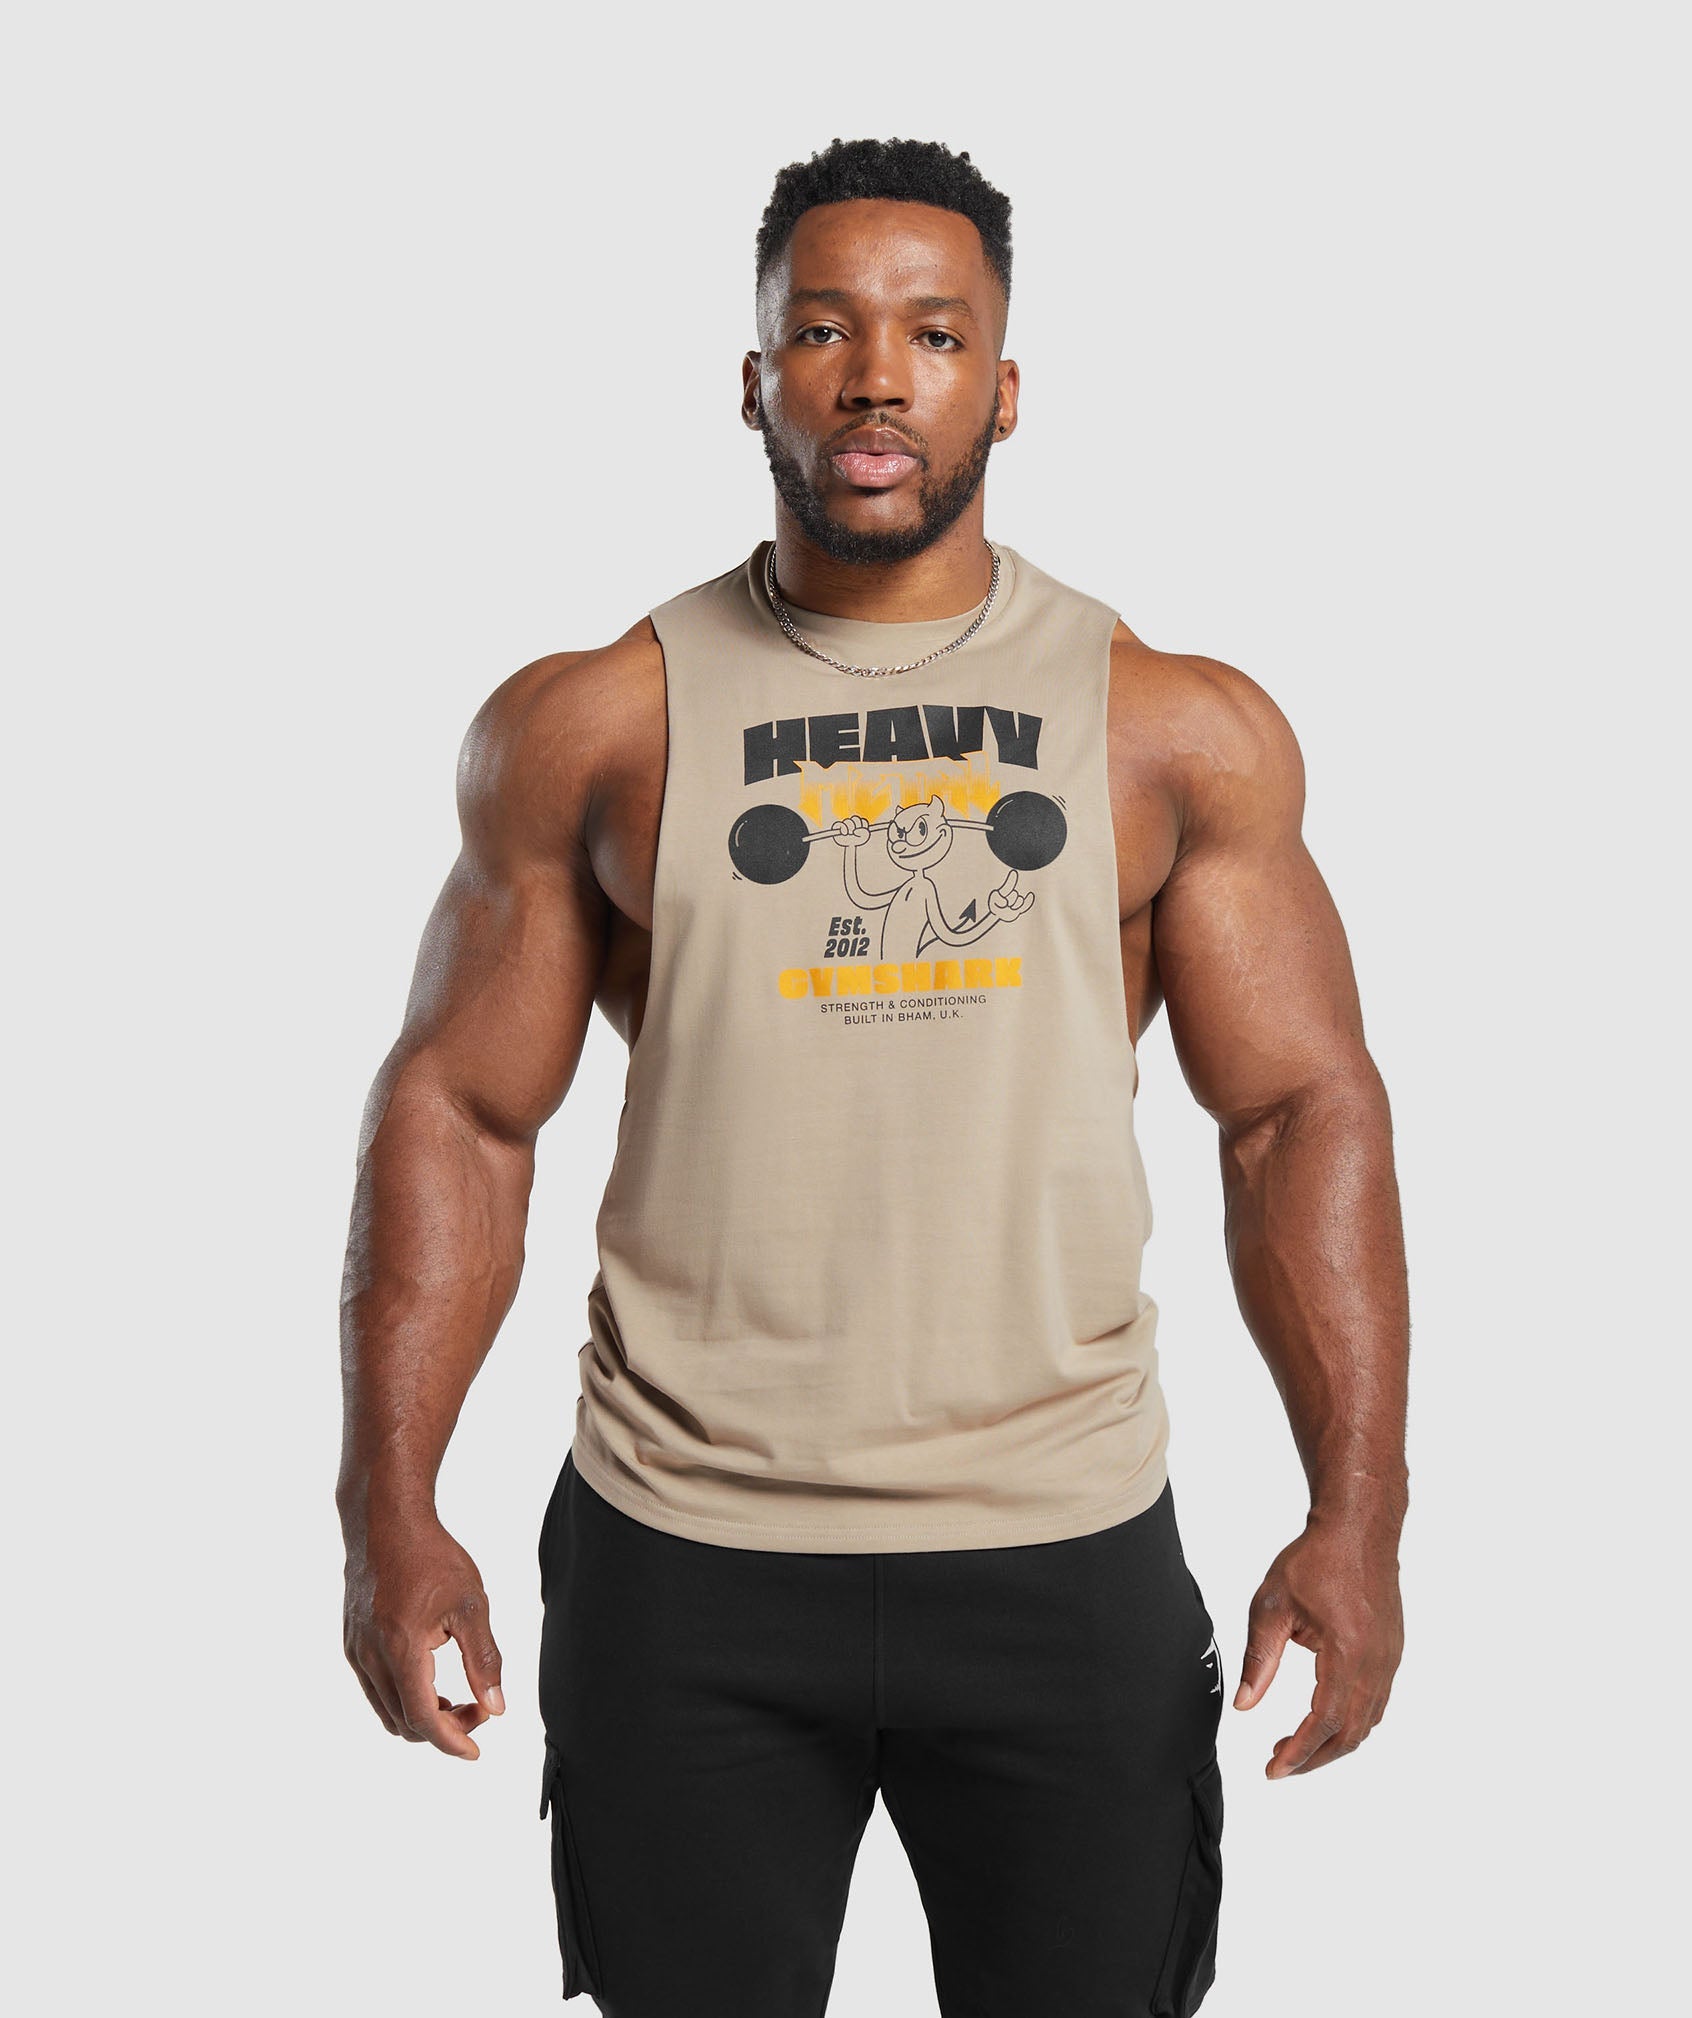 Gymshark Official Store - Men's Gym Clothes & Workout Clothes